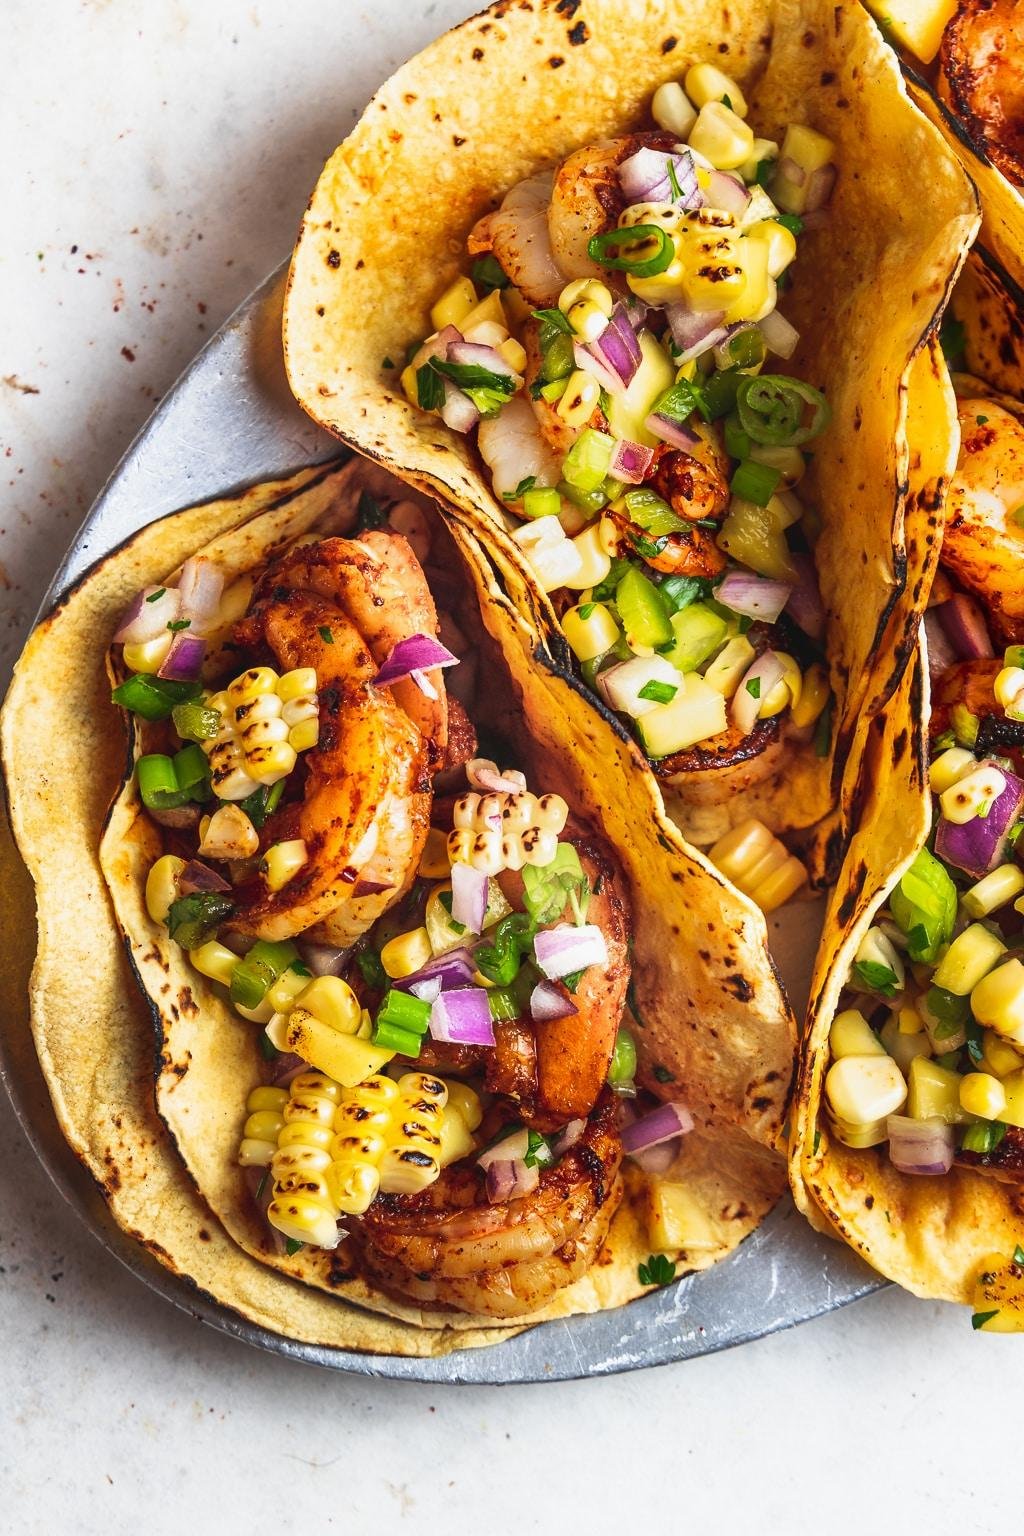 Spicy Shrimp Tacos with Mango Salsa: A Tasty Twist on Taco Tuesday!